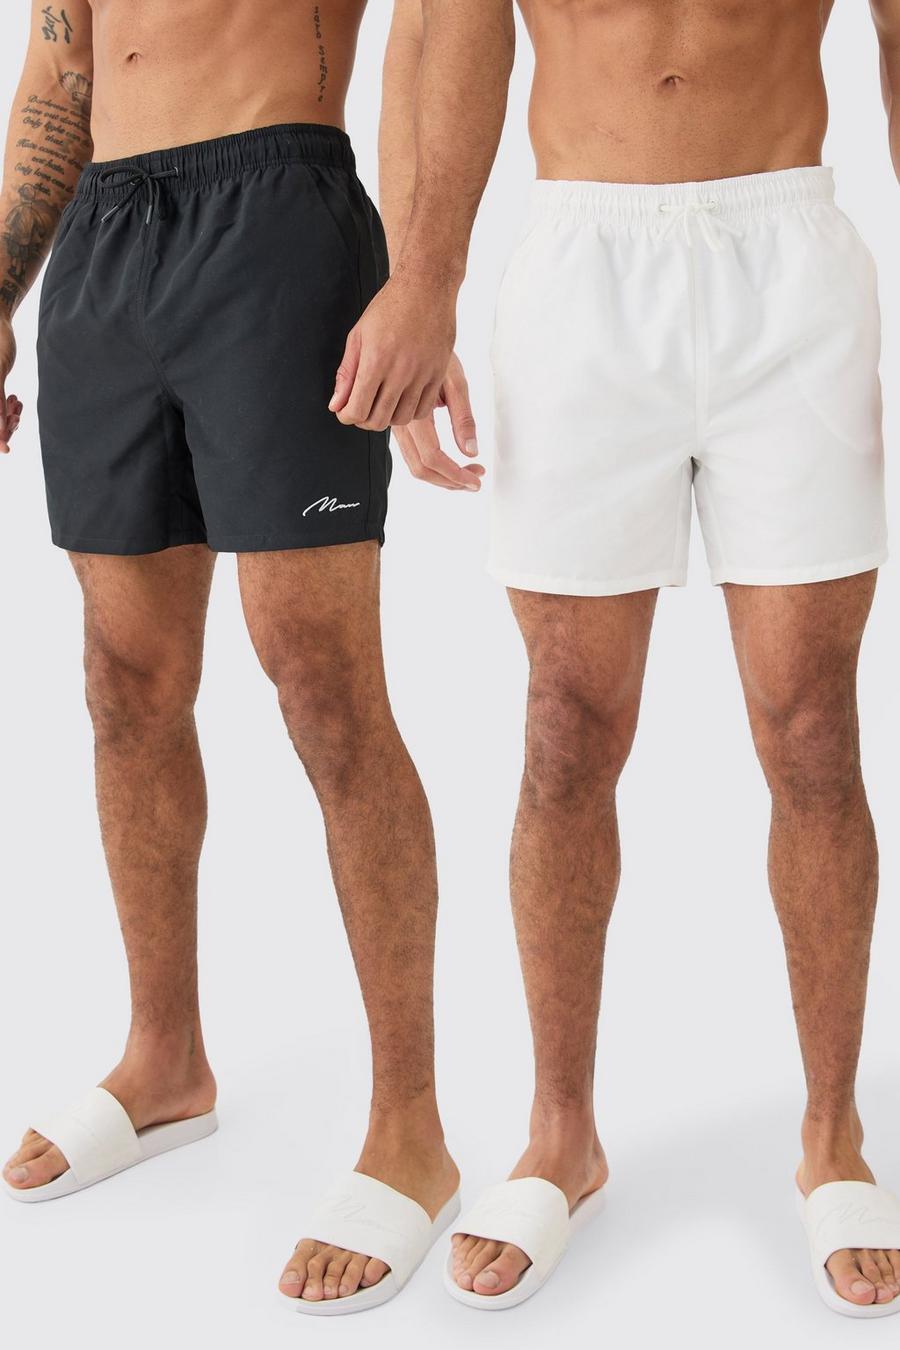 Costume a pantaloncino medio con firma Man - set di 2 paia, Multi image number 1